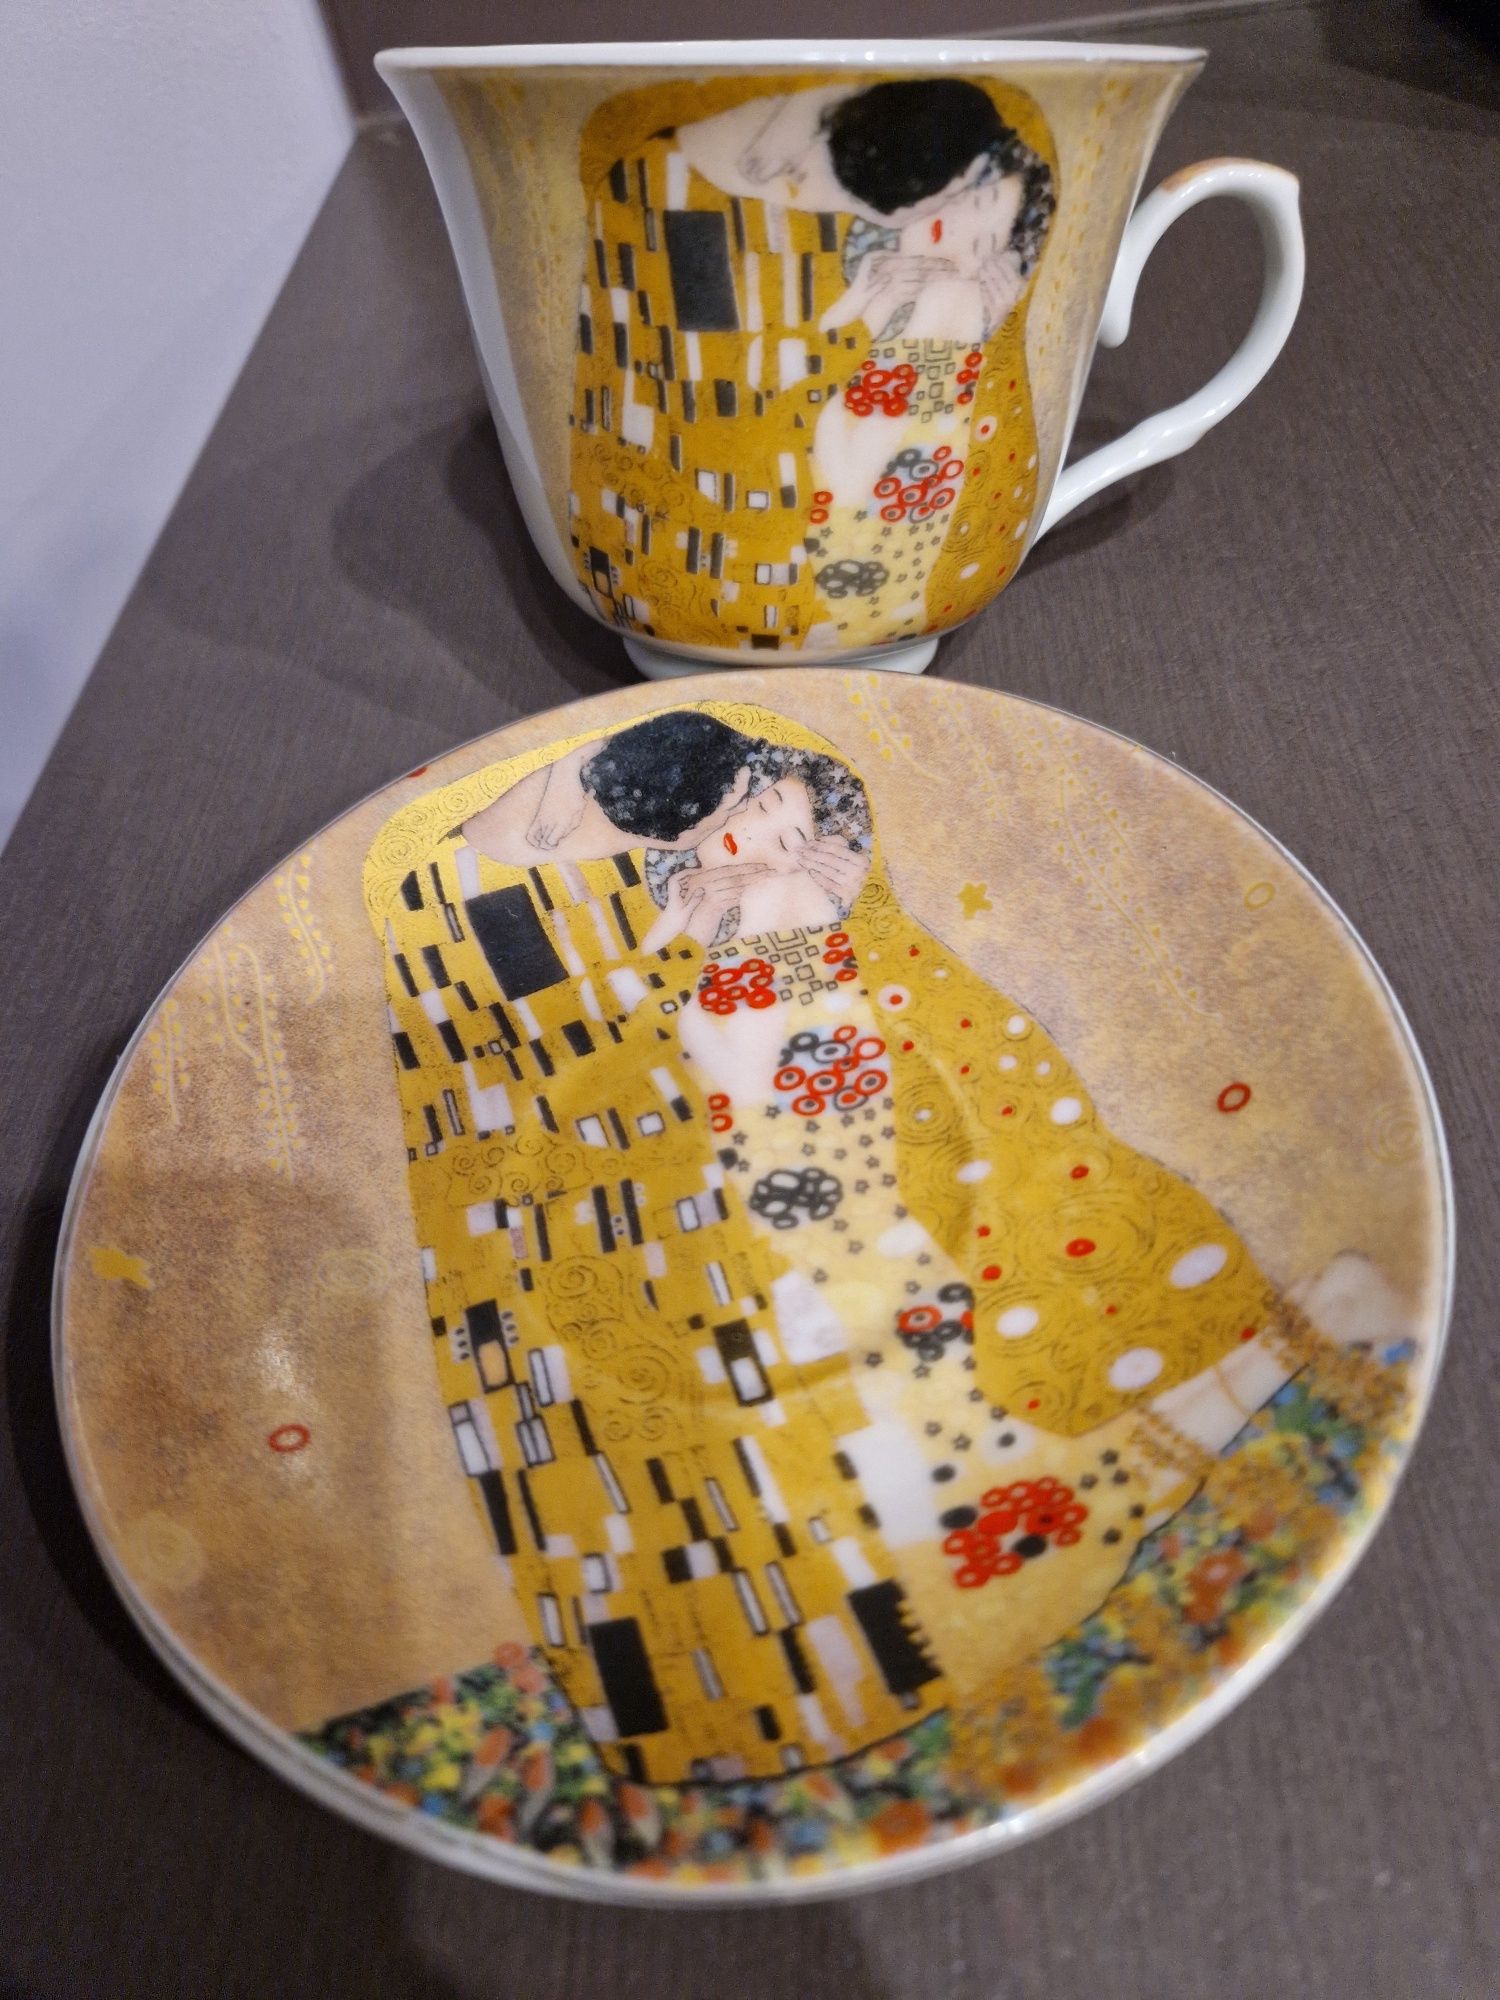 Filiżanka i spodek z porcelany - Gustav Klimt - Pocałunek, filiżanka